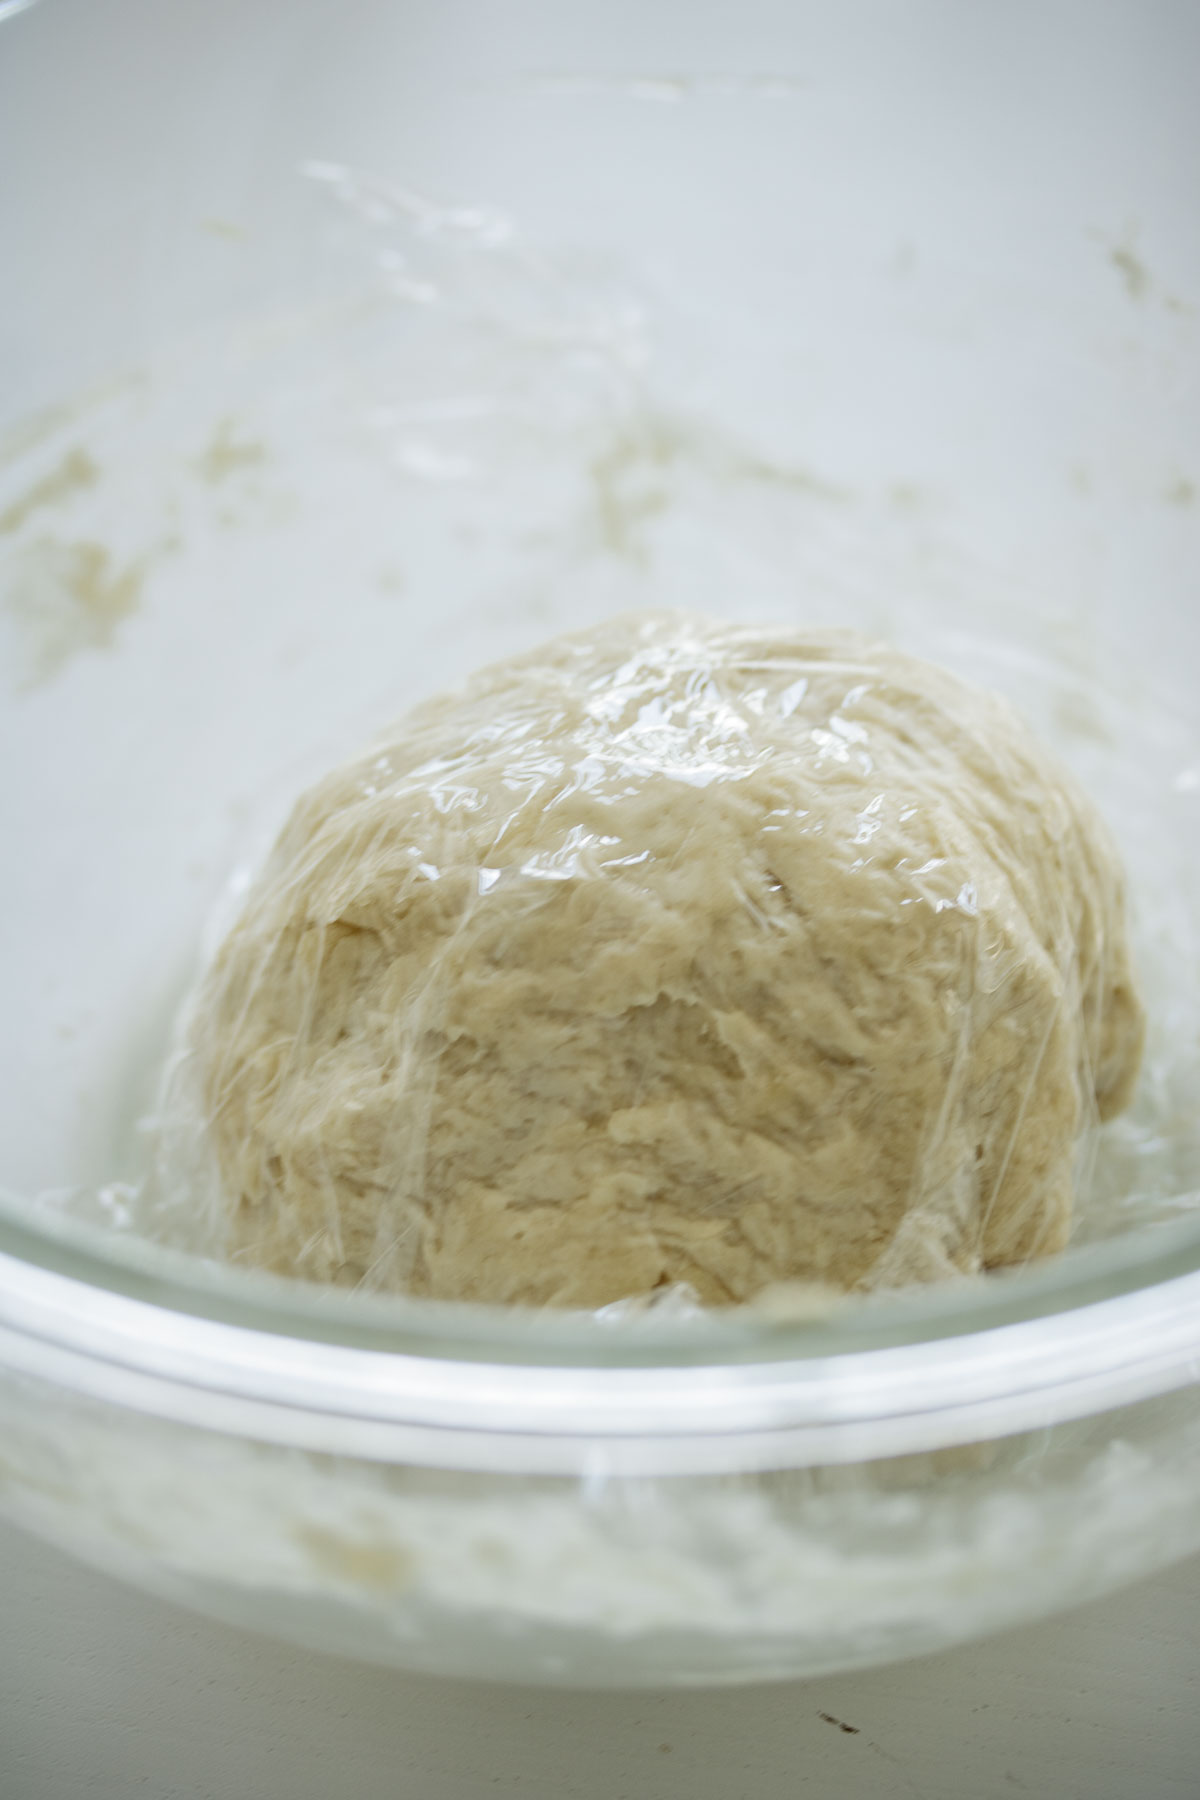 Dough covered, resting inside a glass bowl.